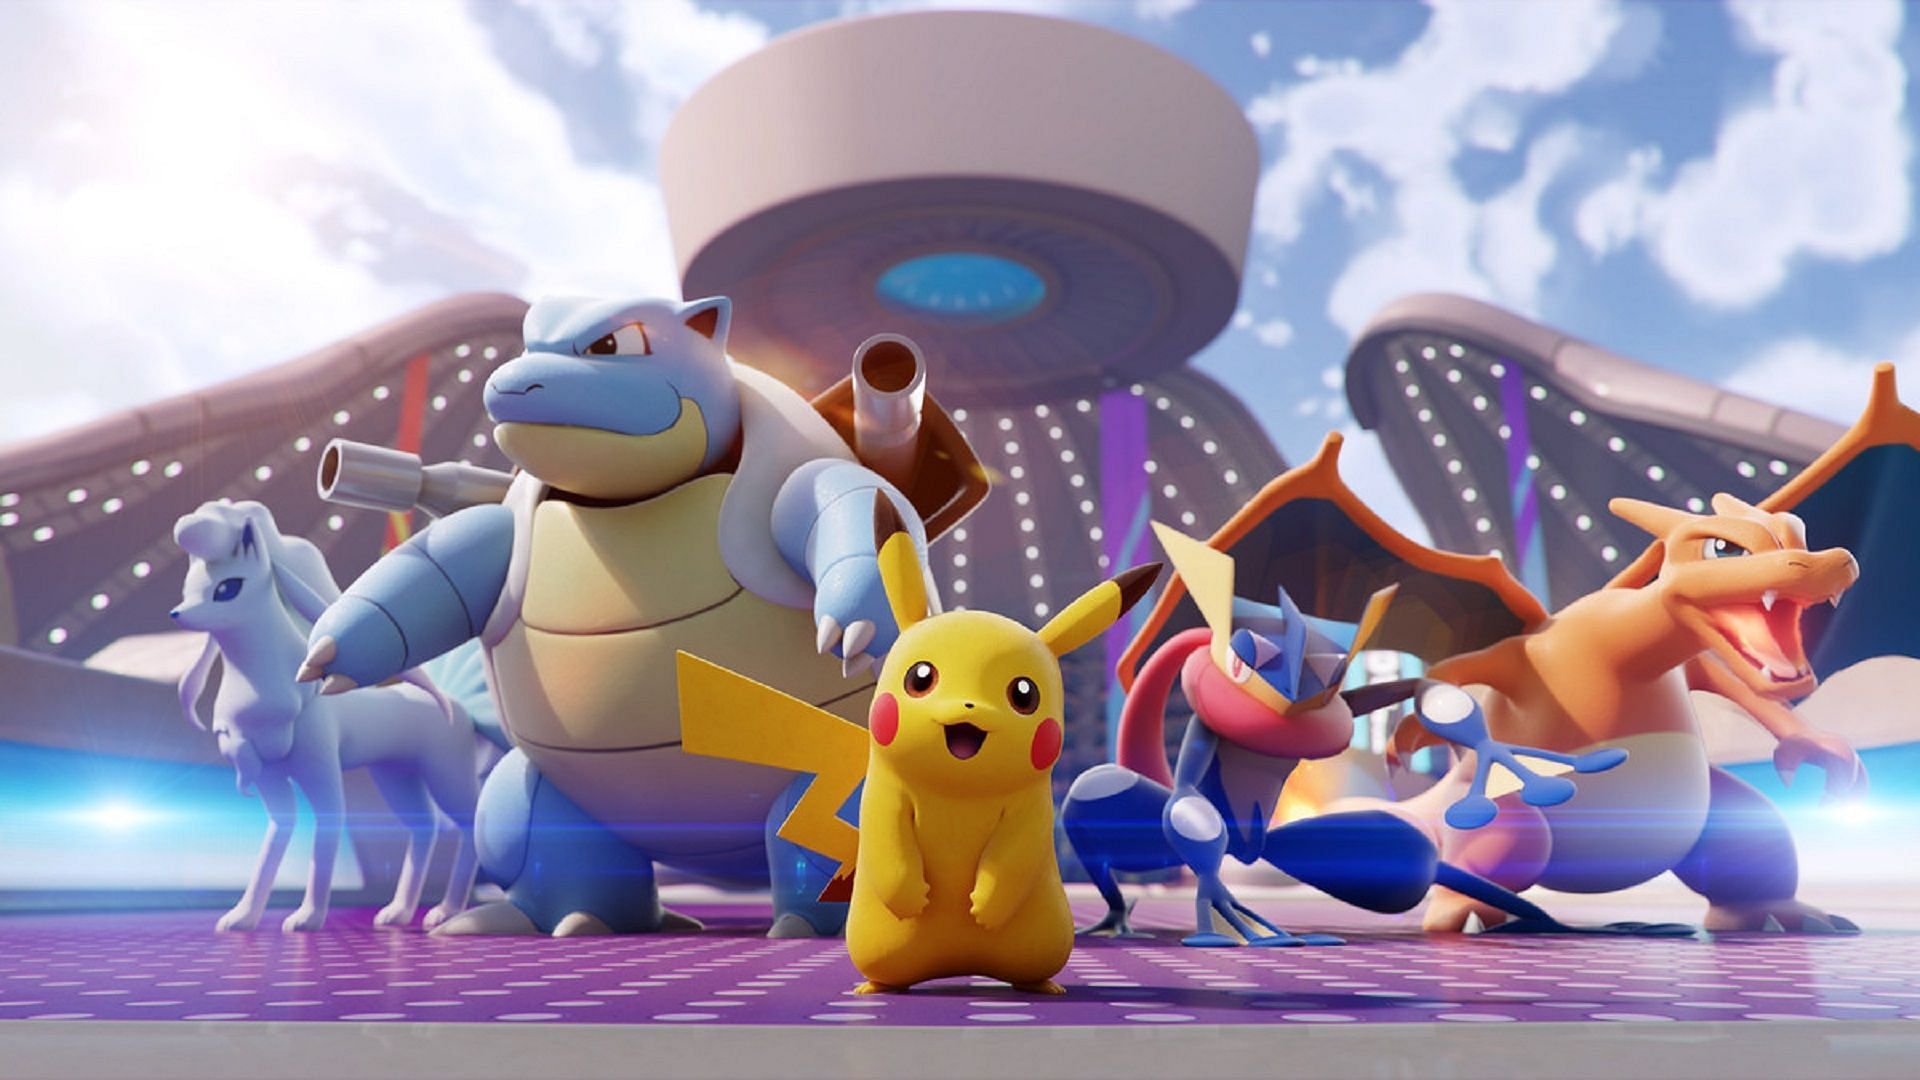 Pokemon Unite saw plenty of changes and new faces in 2022 (Image via The Pokemon Company)